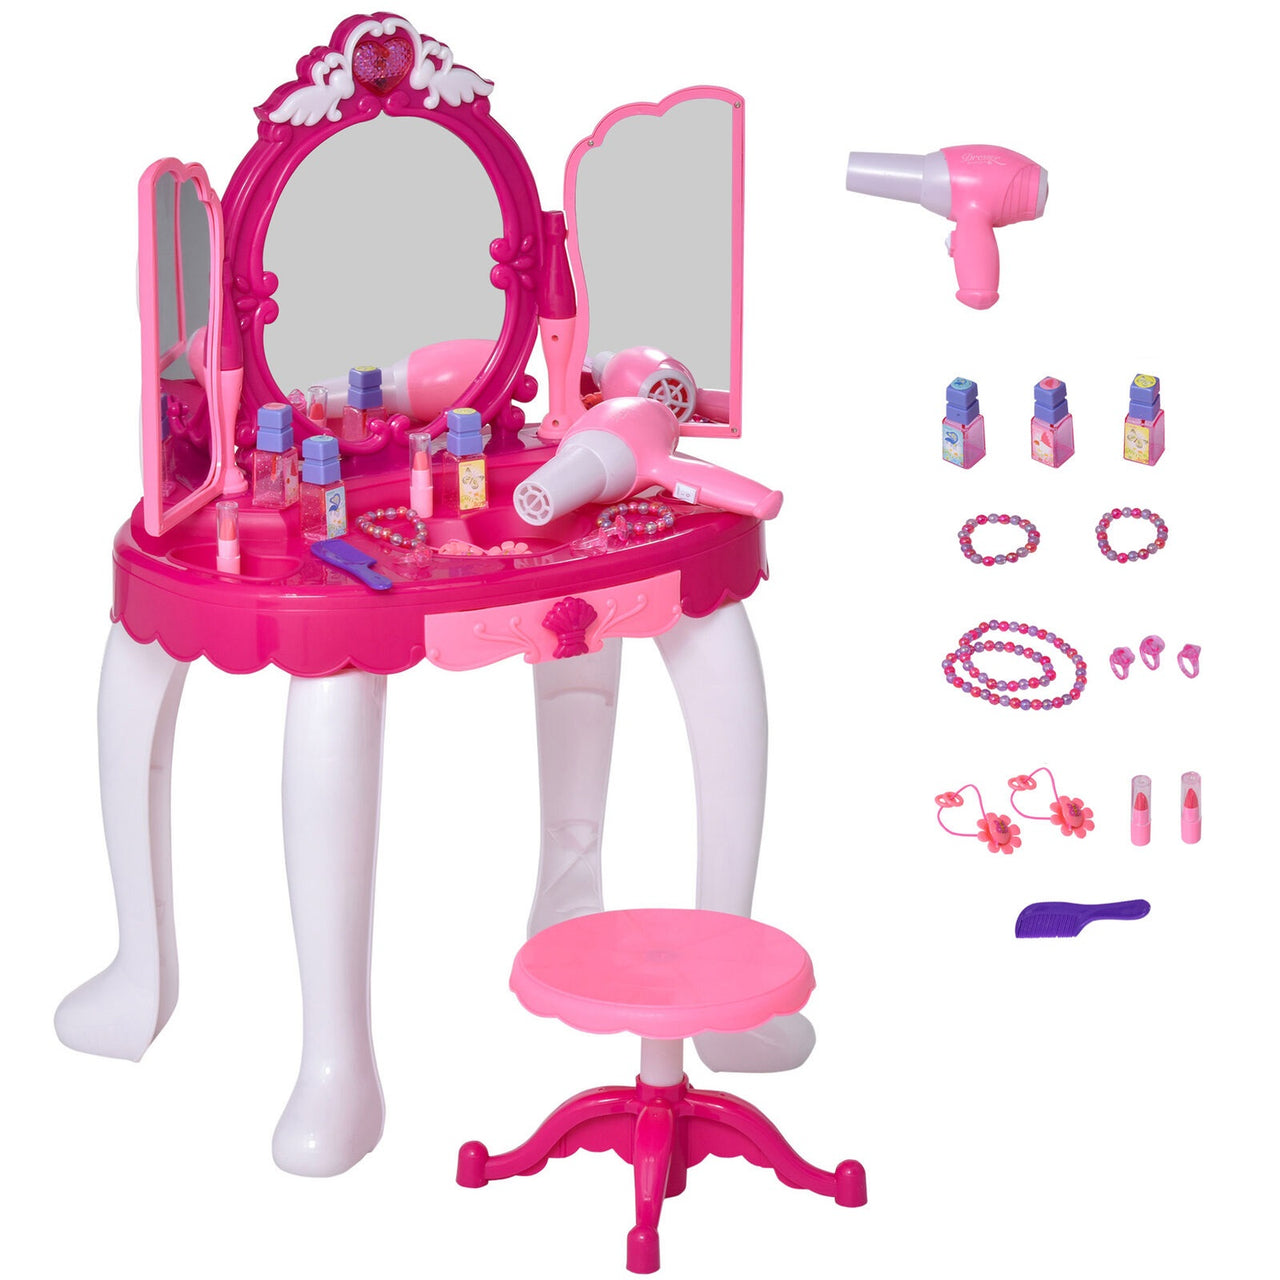 Glamor Mirror Makeup Dressing Table